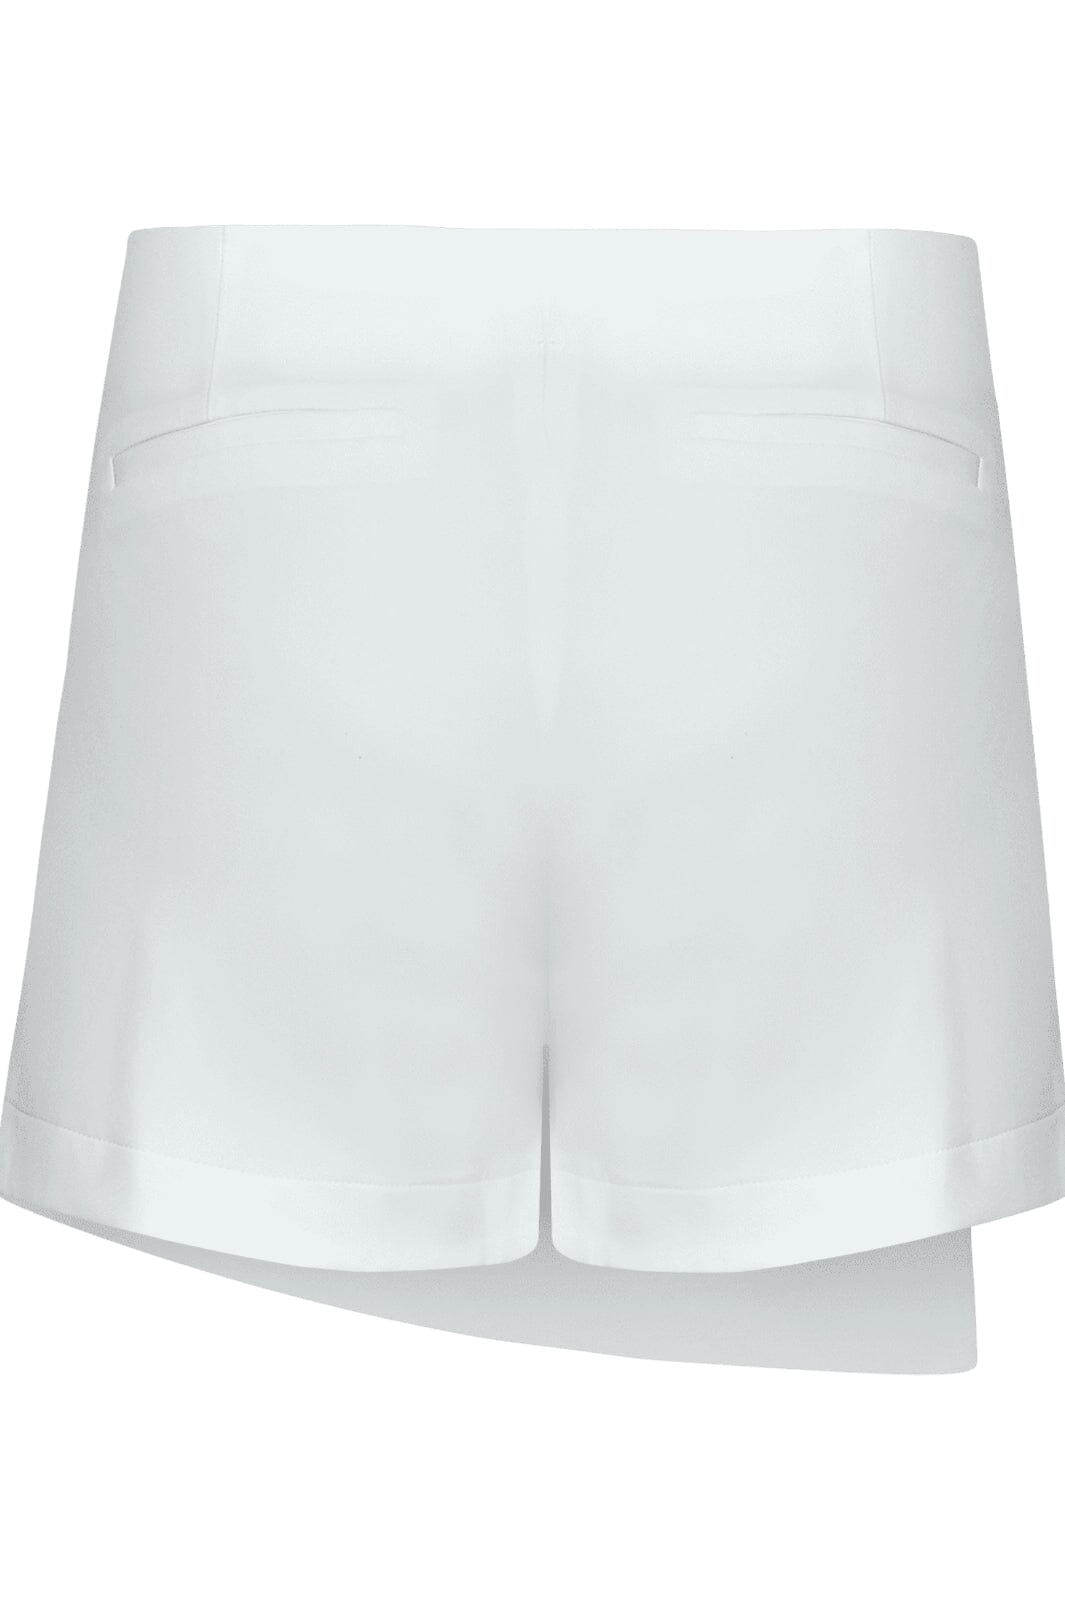 Sisters Point - Miqa-Skort1 - 115 Cream Shorts 